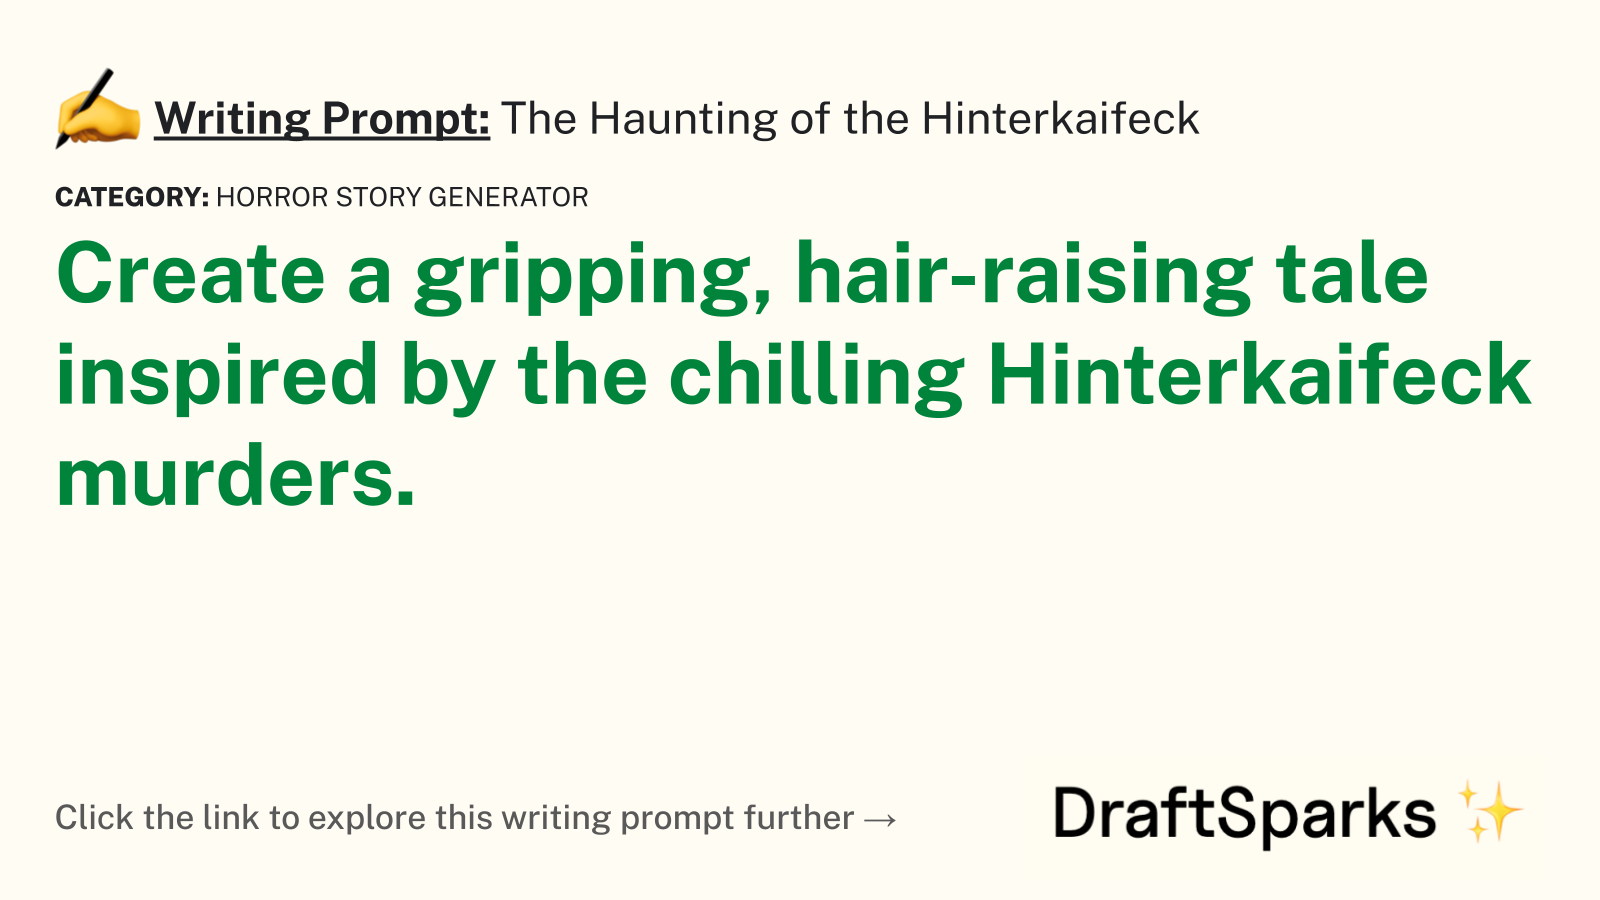 The Haunting of the Hinterkaifeck